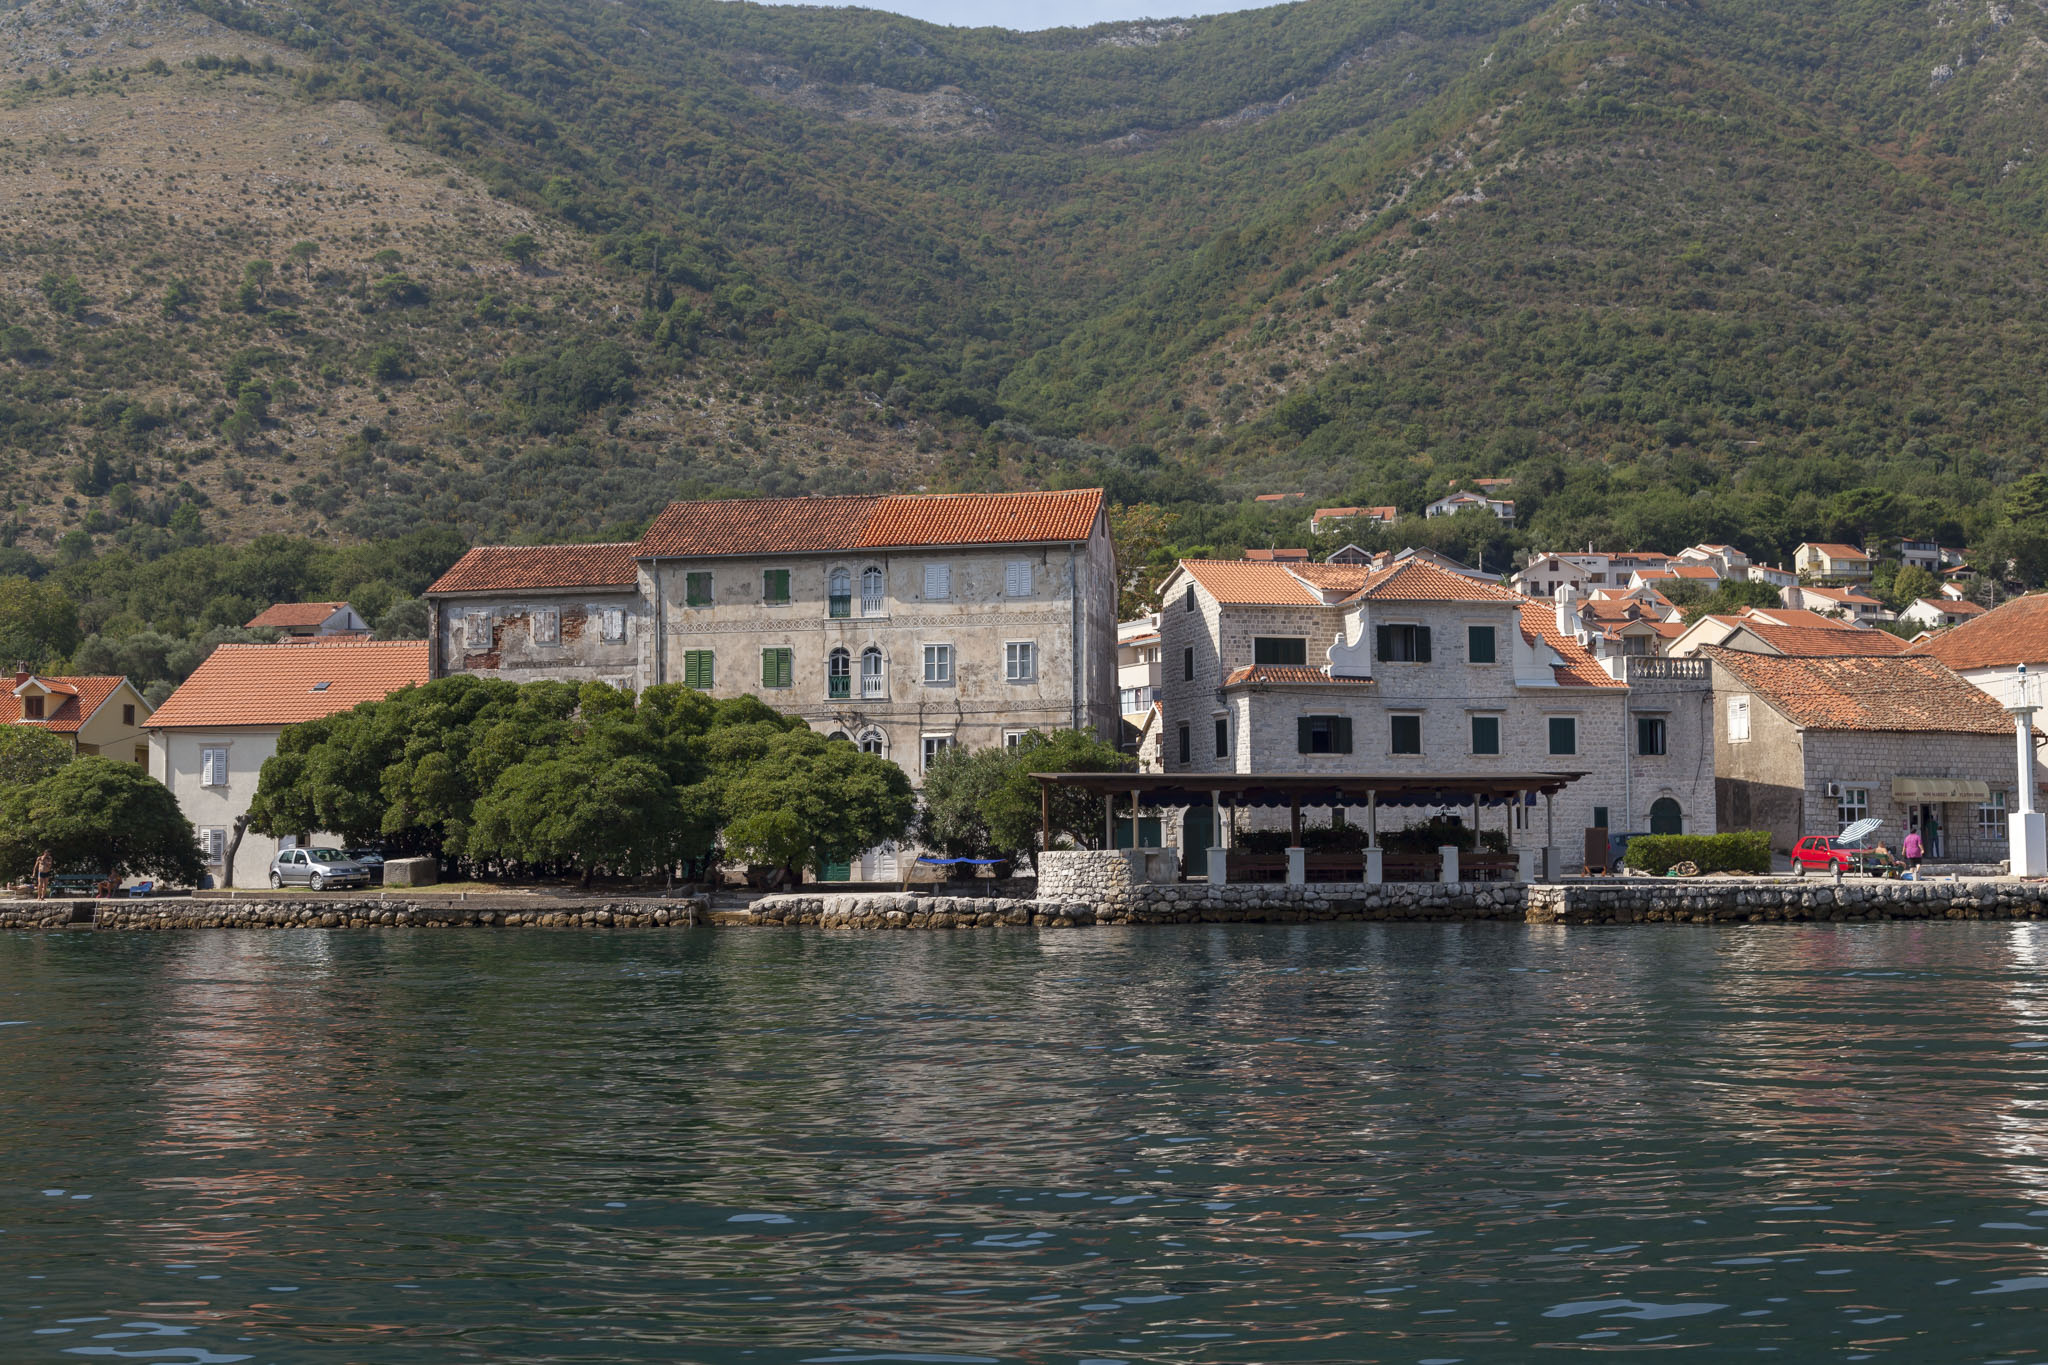 Bay Of Kotor